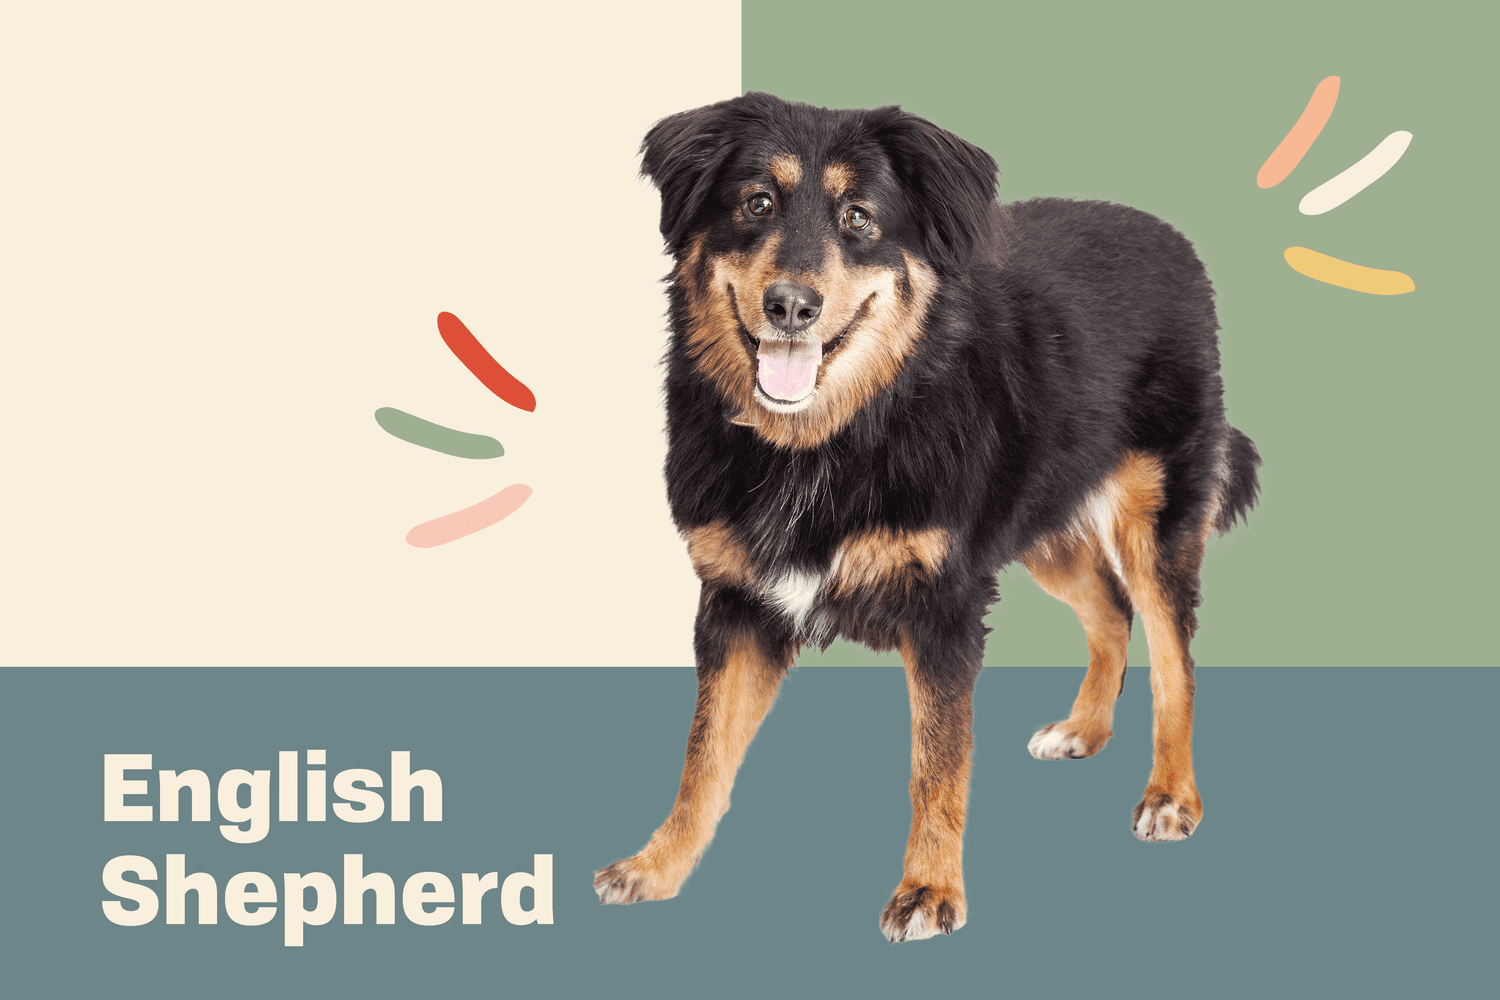 English Shepherd dog standing